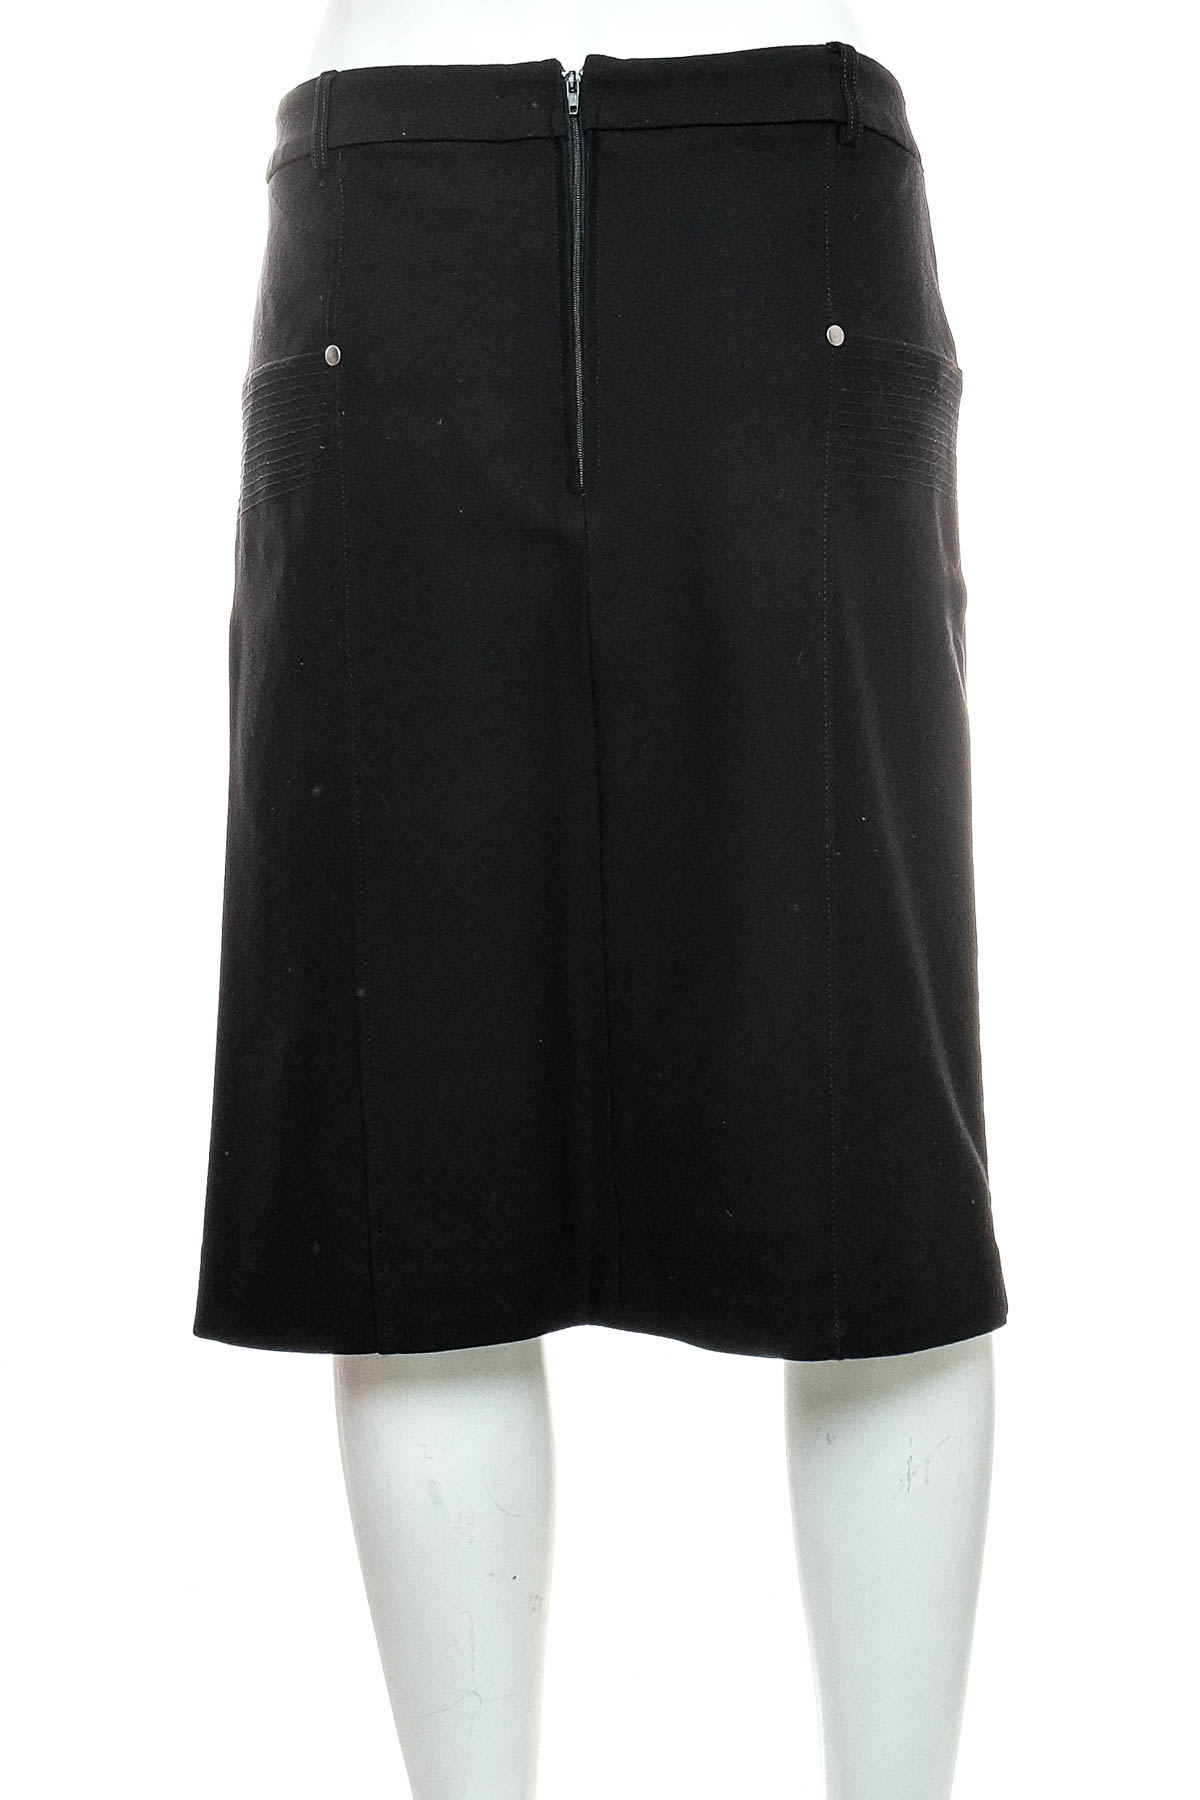 Skirt - BUGARRI Fashion - 1